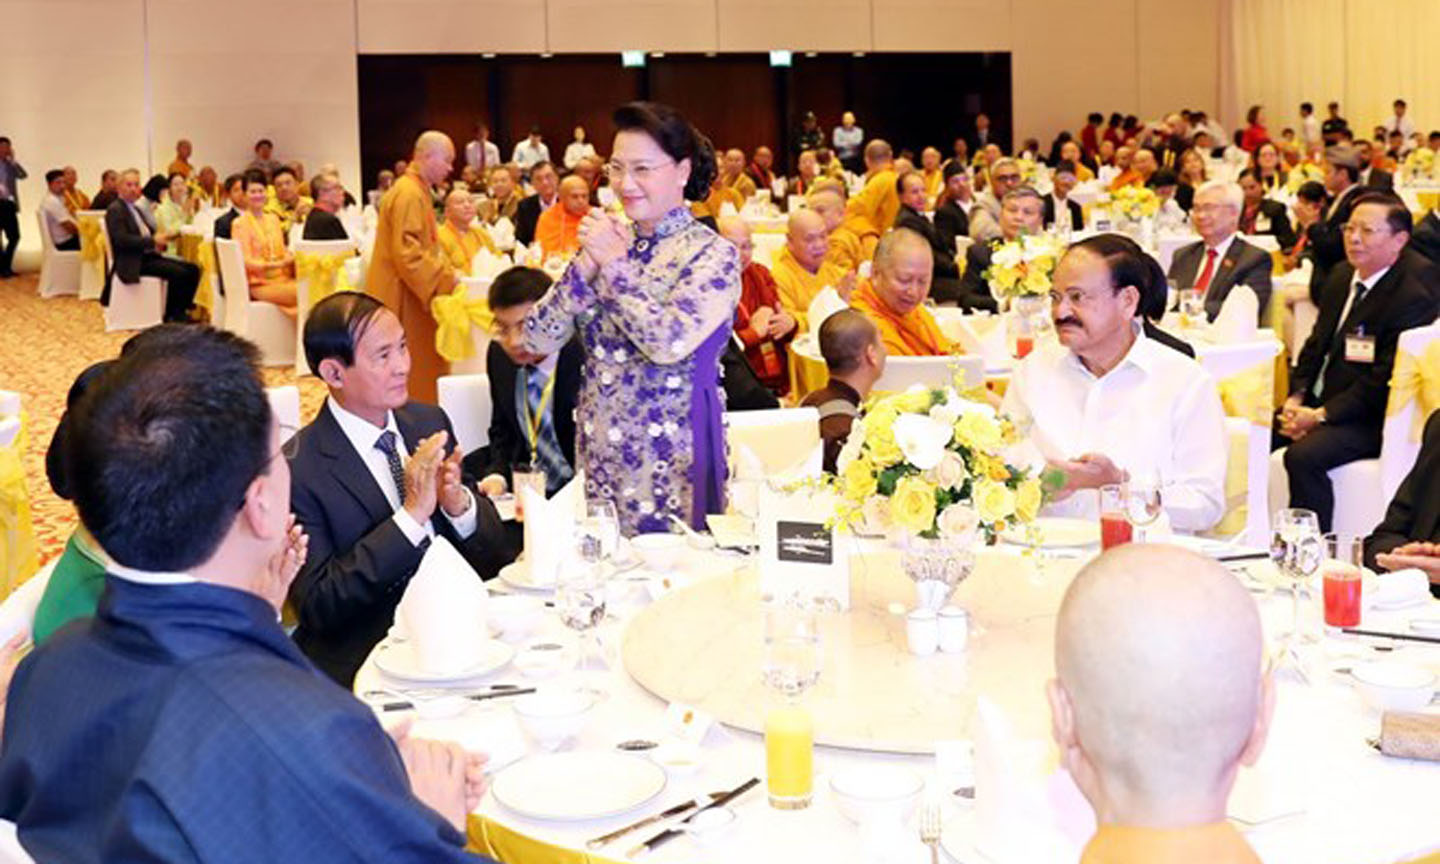 National Assembly Chairwoman Nguyen Thi Kim Ngan stands among international participants at the banquet (Photo: VNA)